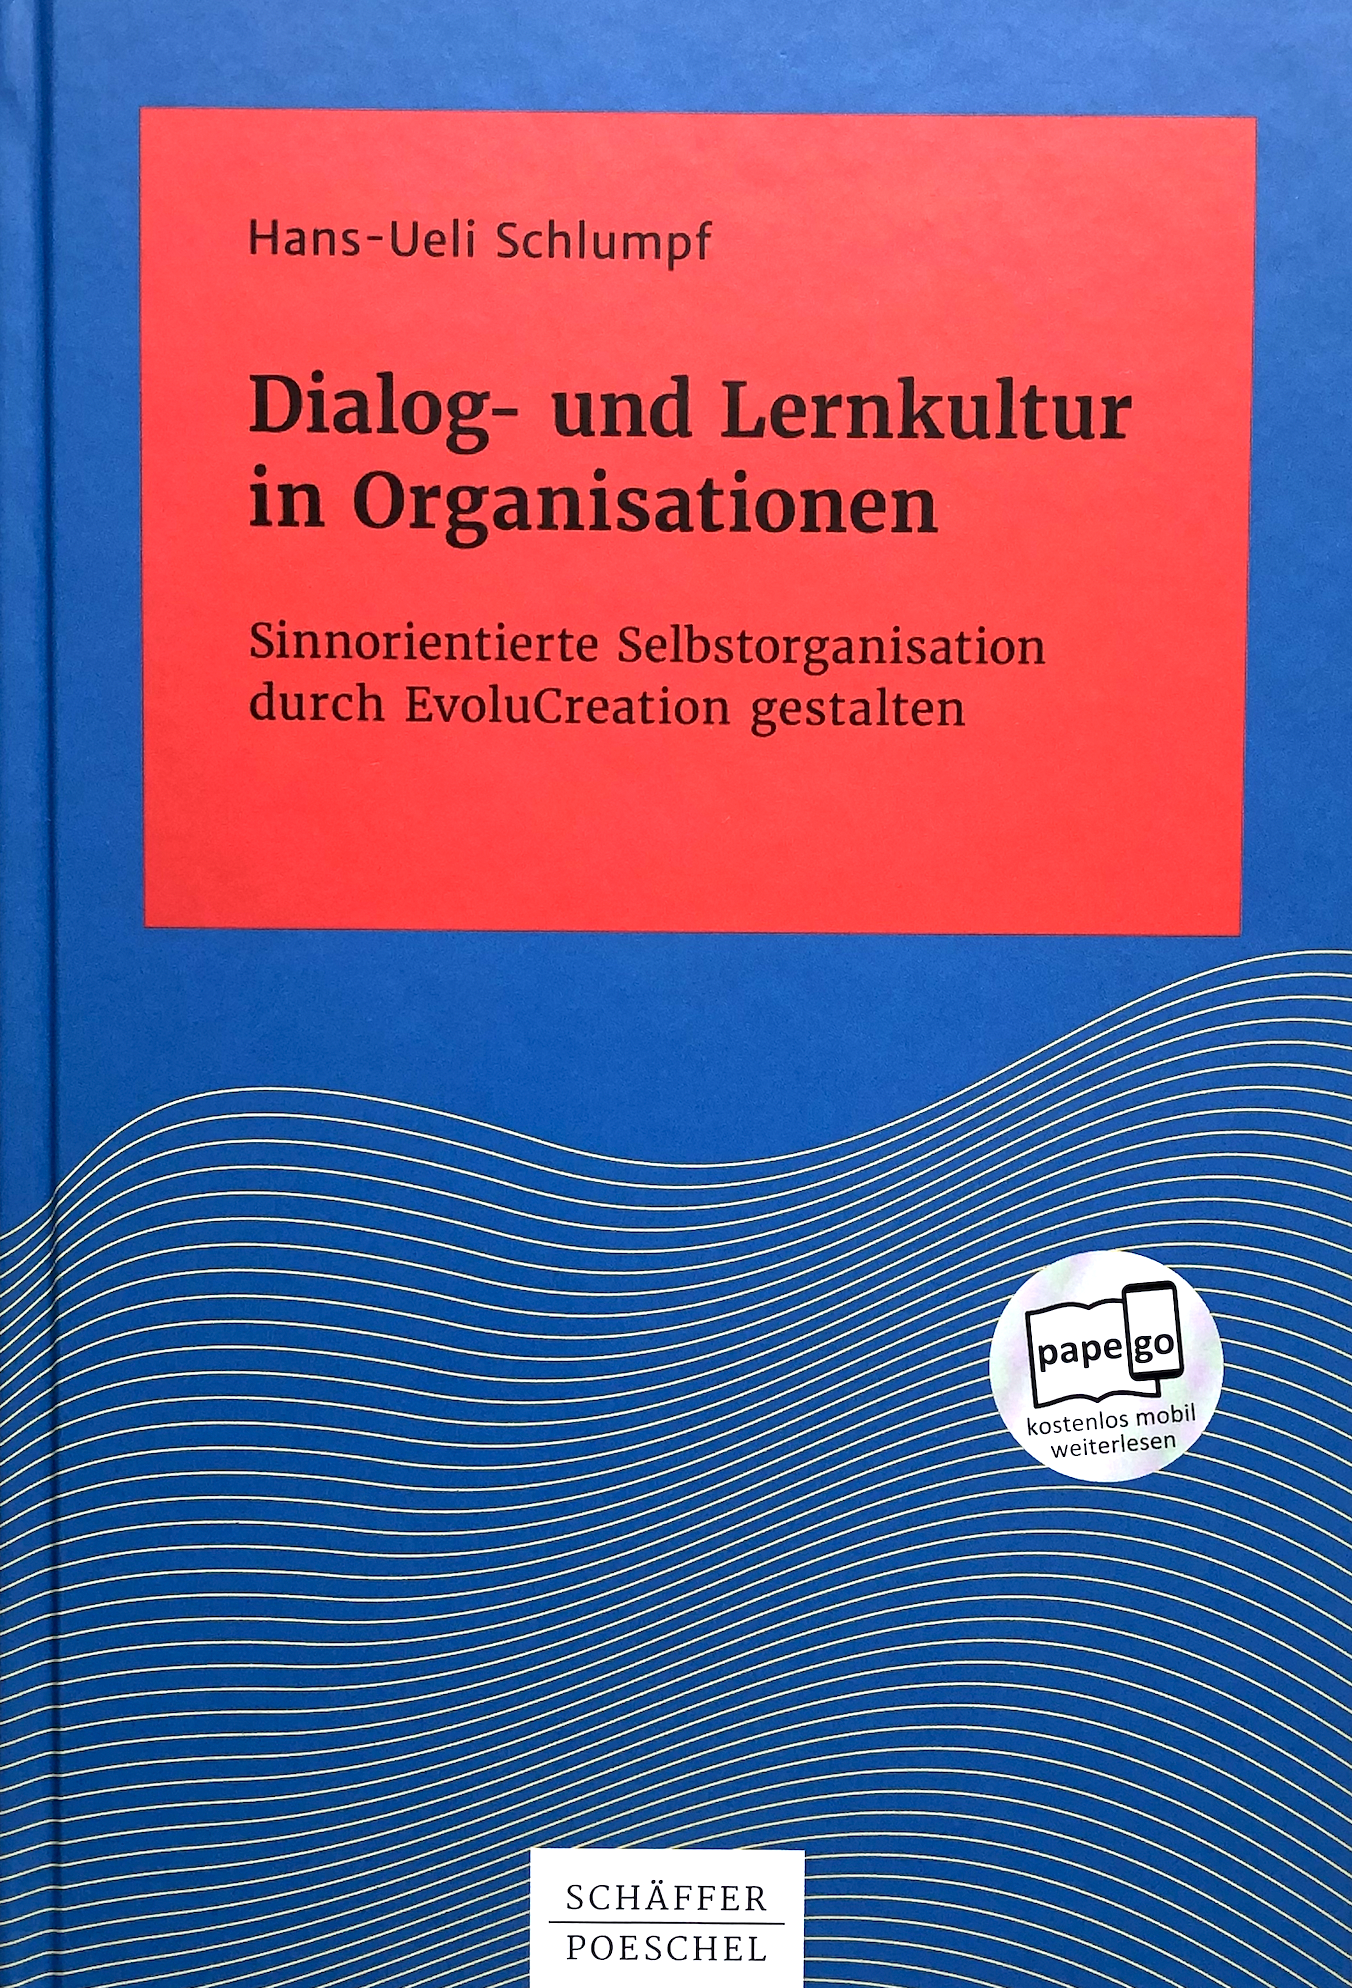 Dialog- und Lernkultur in Organisationen_frontal.png